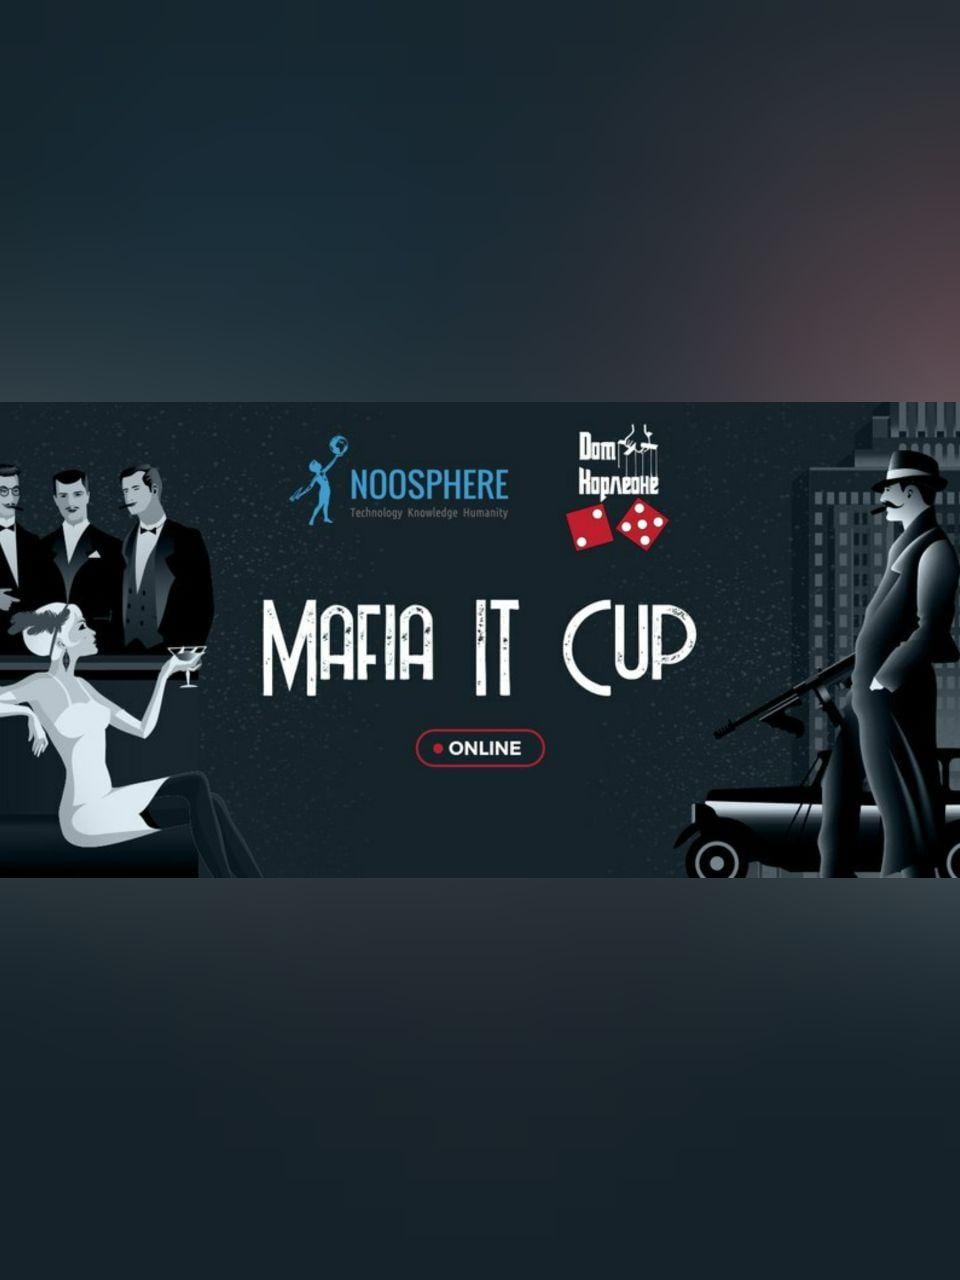 Mafia IT Cup 2020 Днепр, 18.07.2020, цена, даты, купить билеты. Афиша Днепра